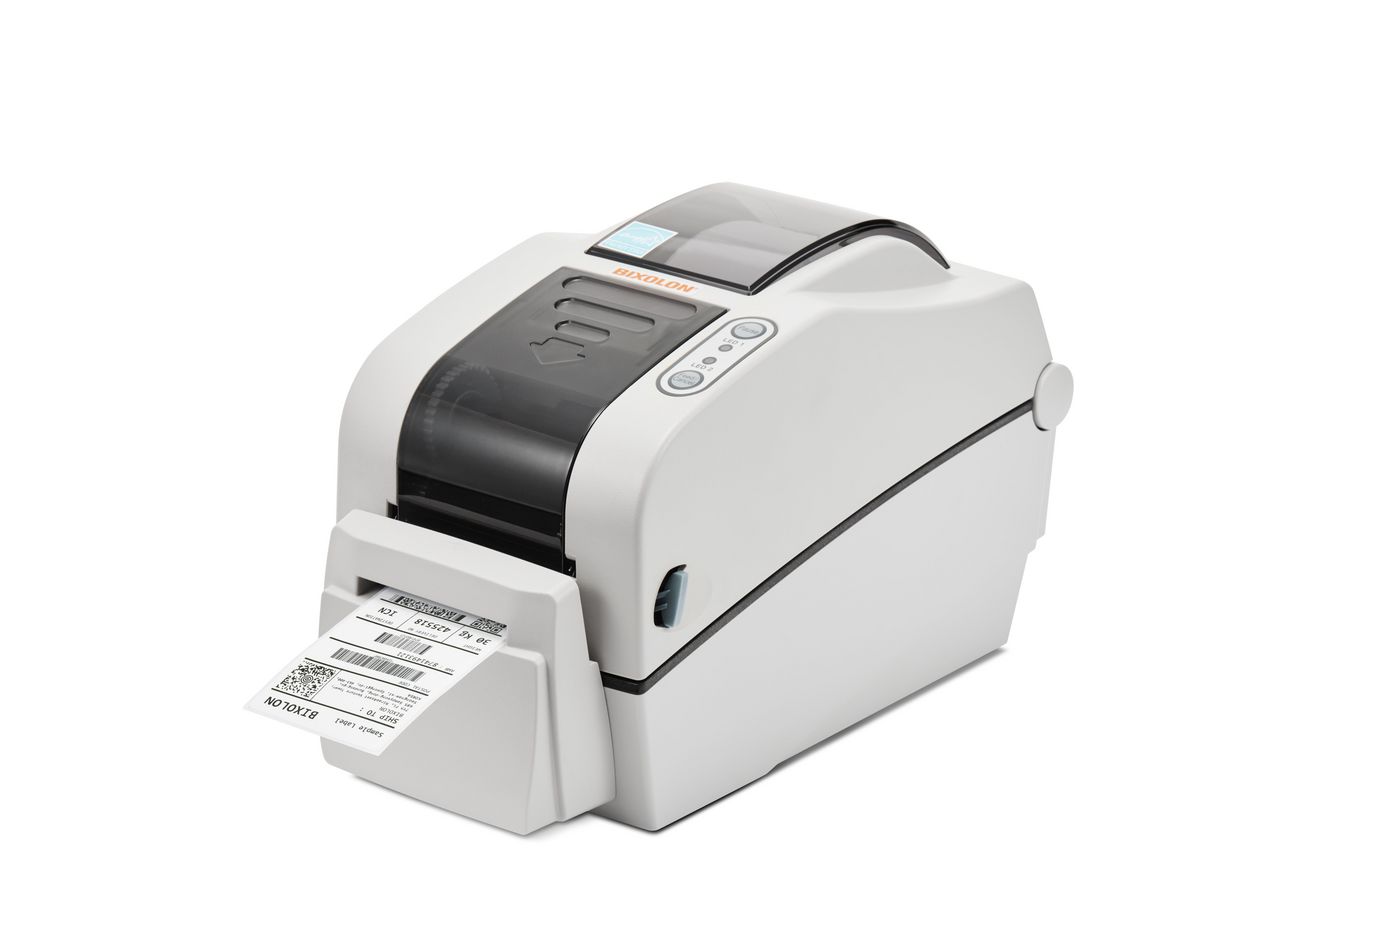 Slp-tx223d - Label Printer - Direct Thermal - USB / Serial / Parallel